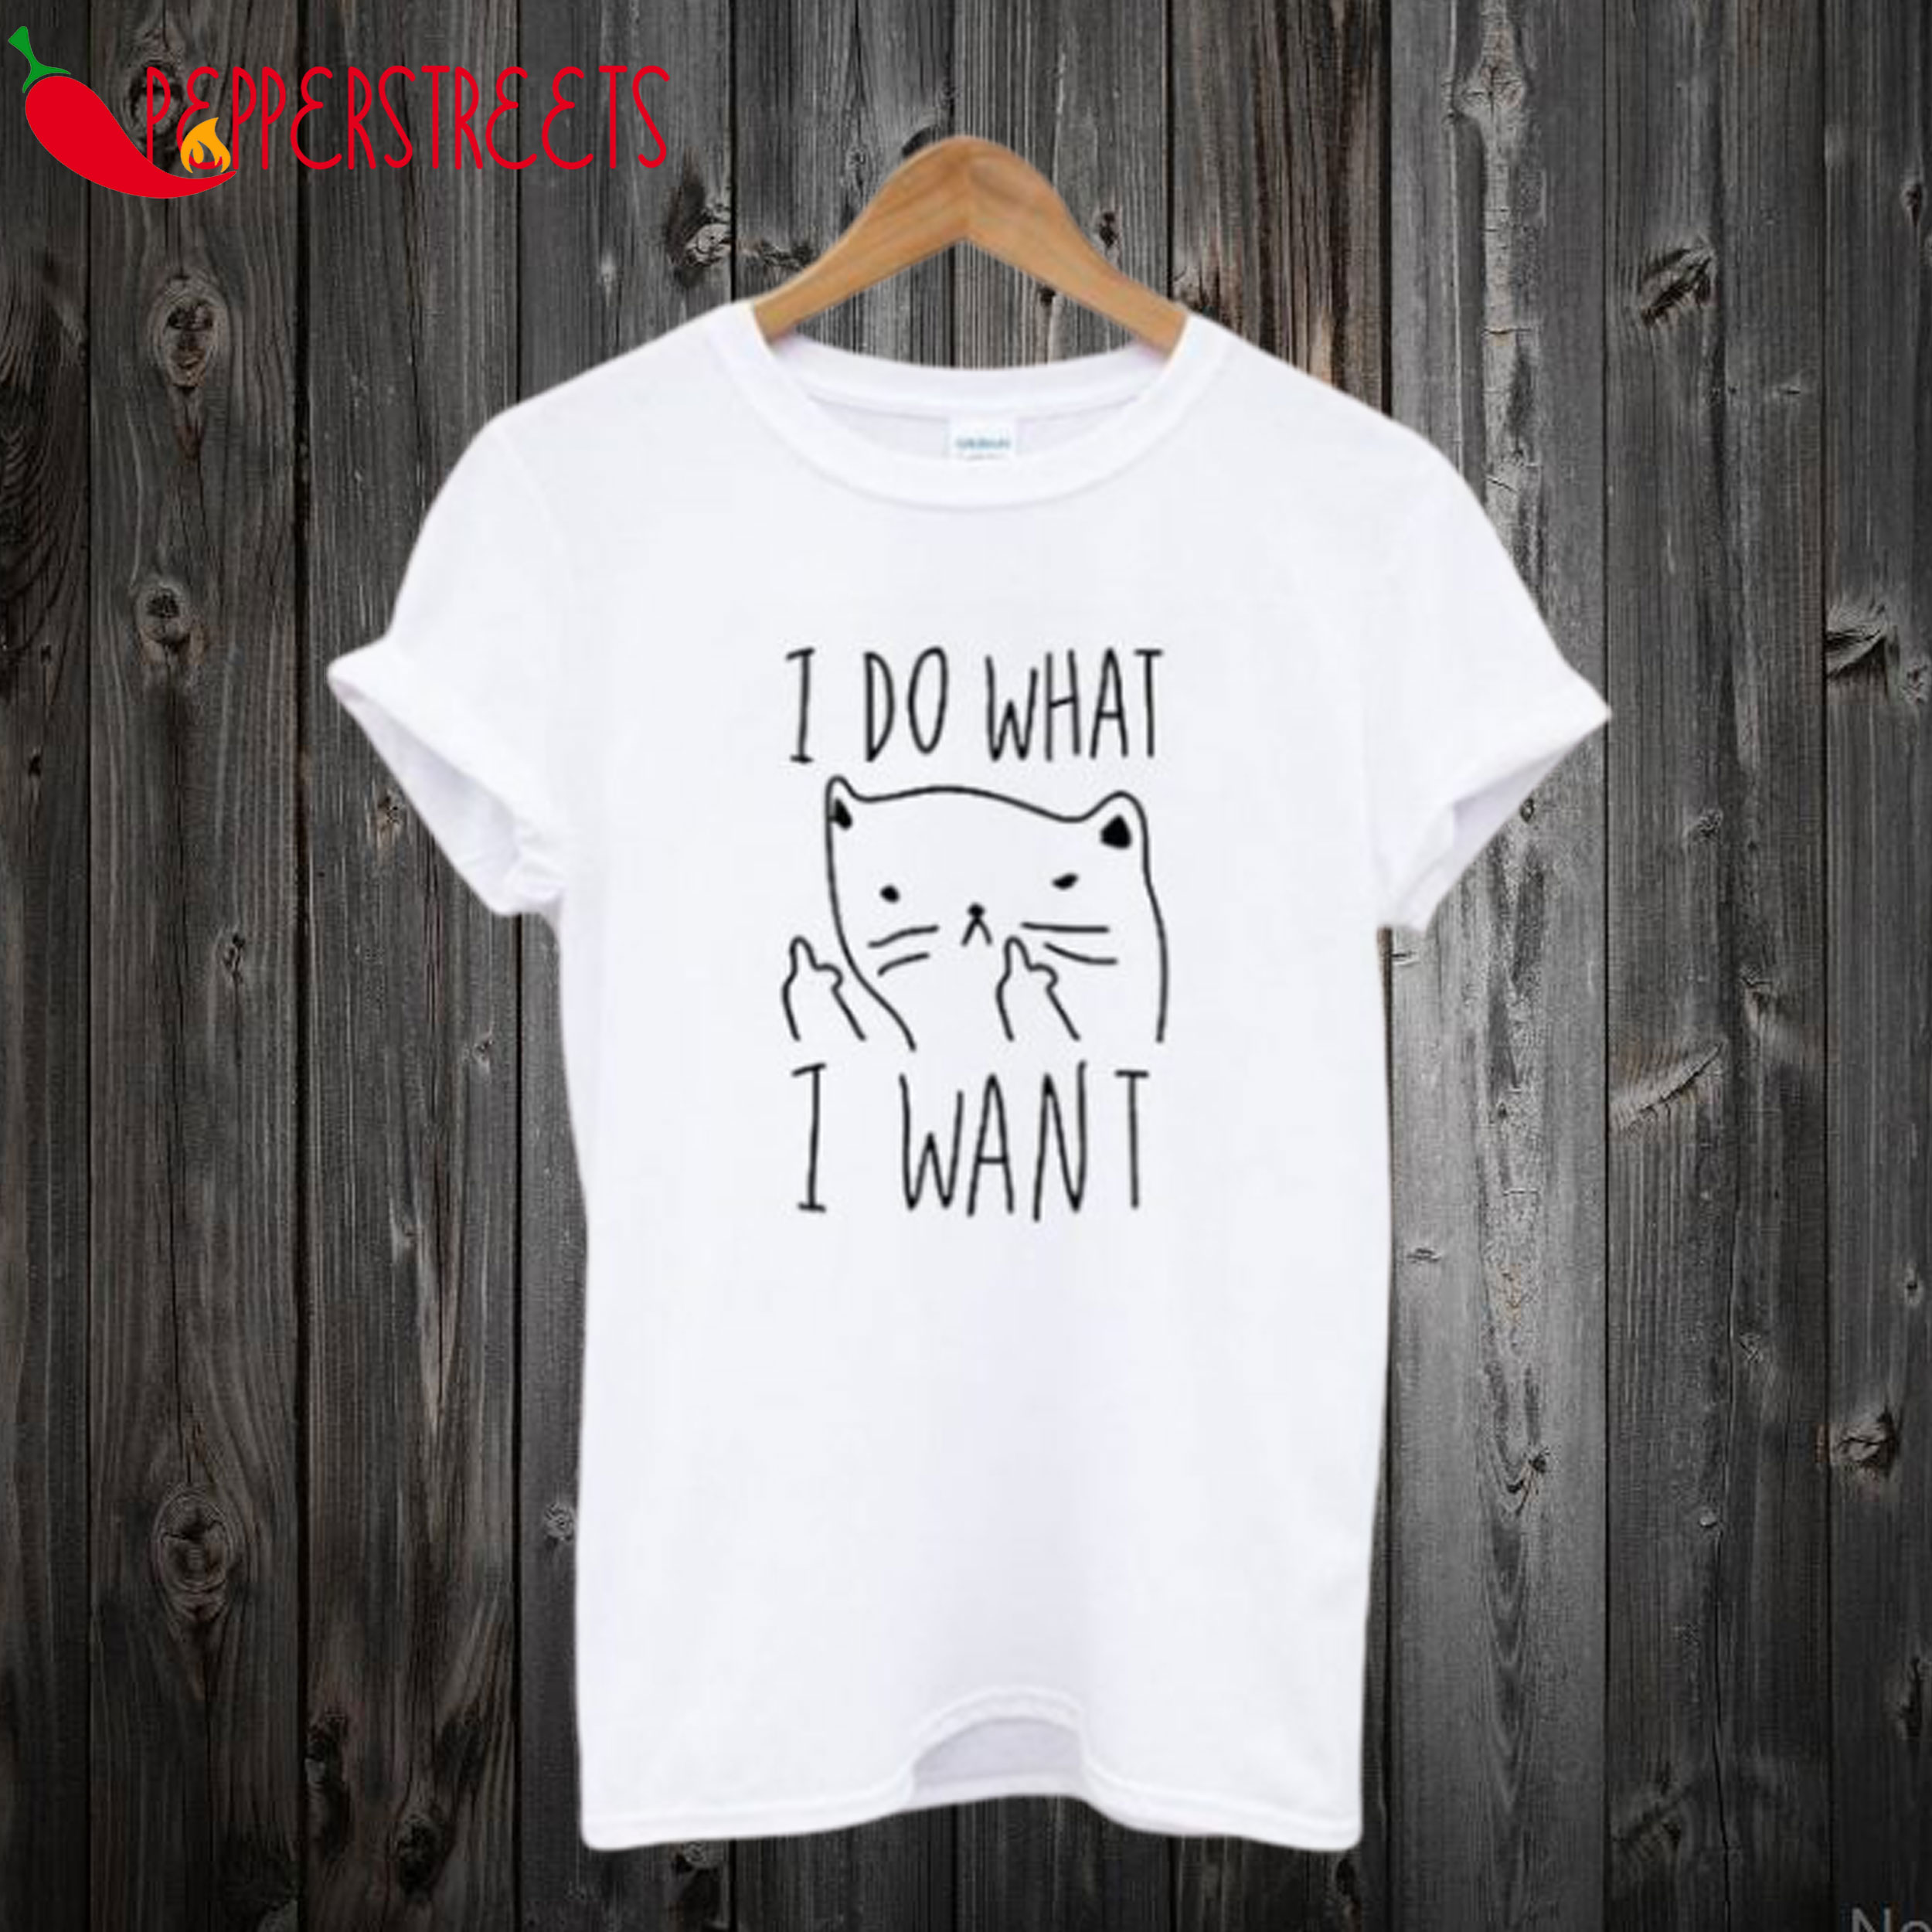 Who Cares Cat T-shirt